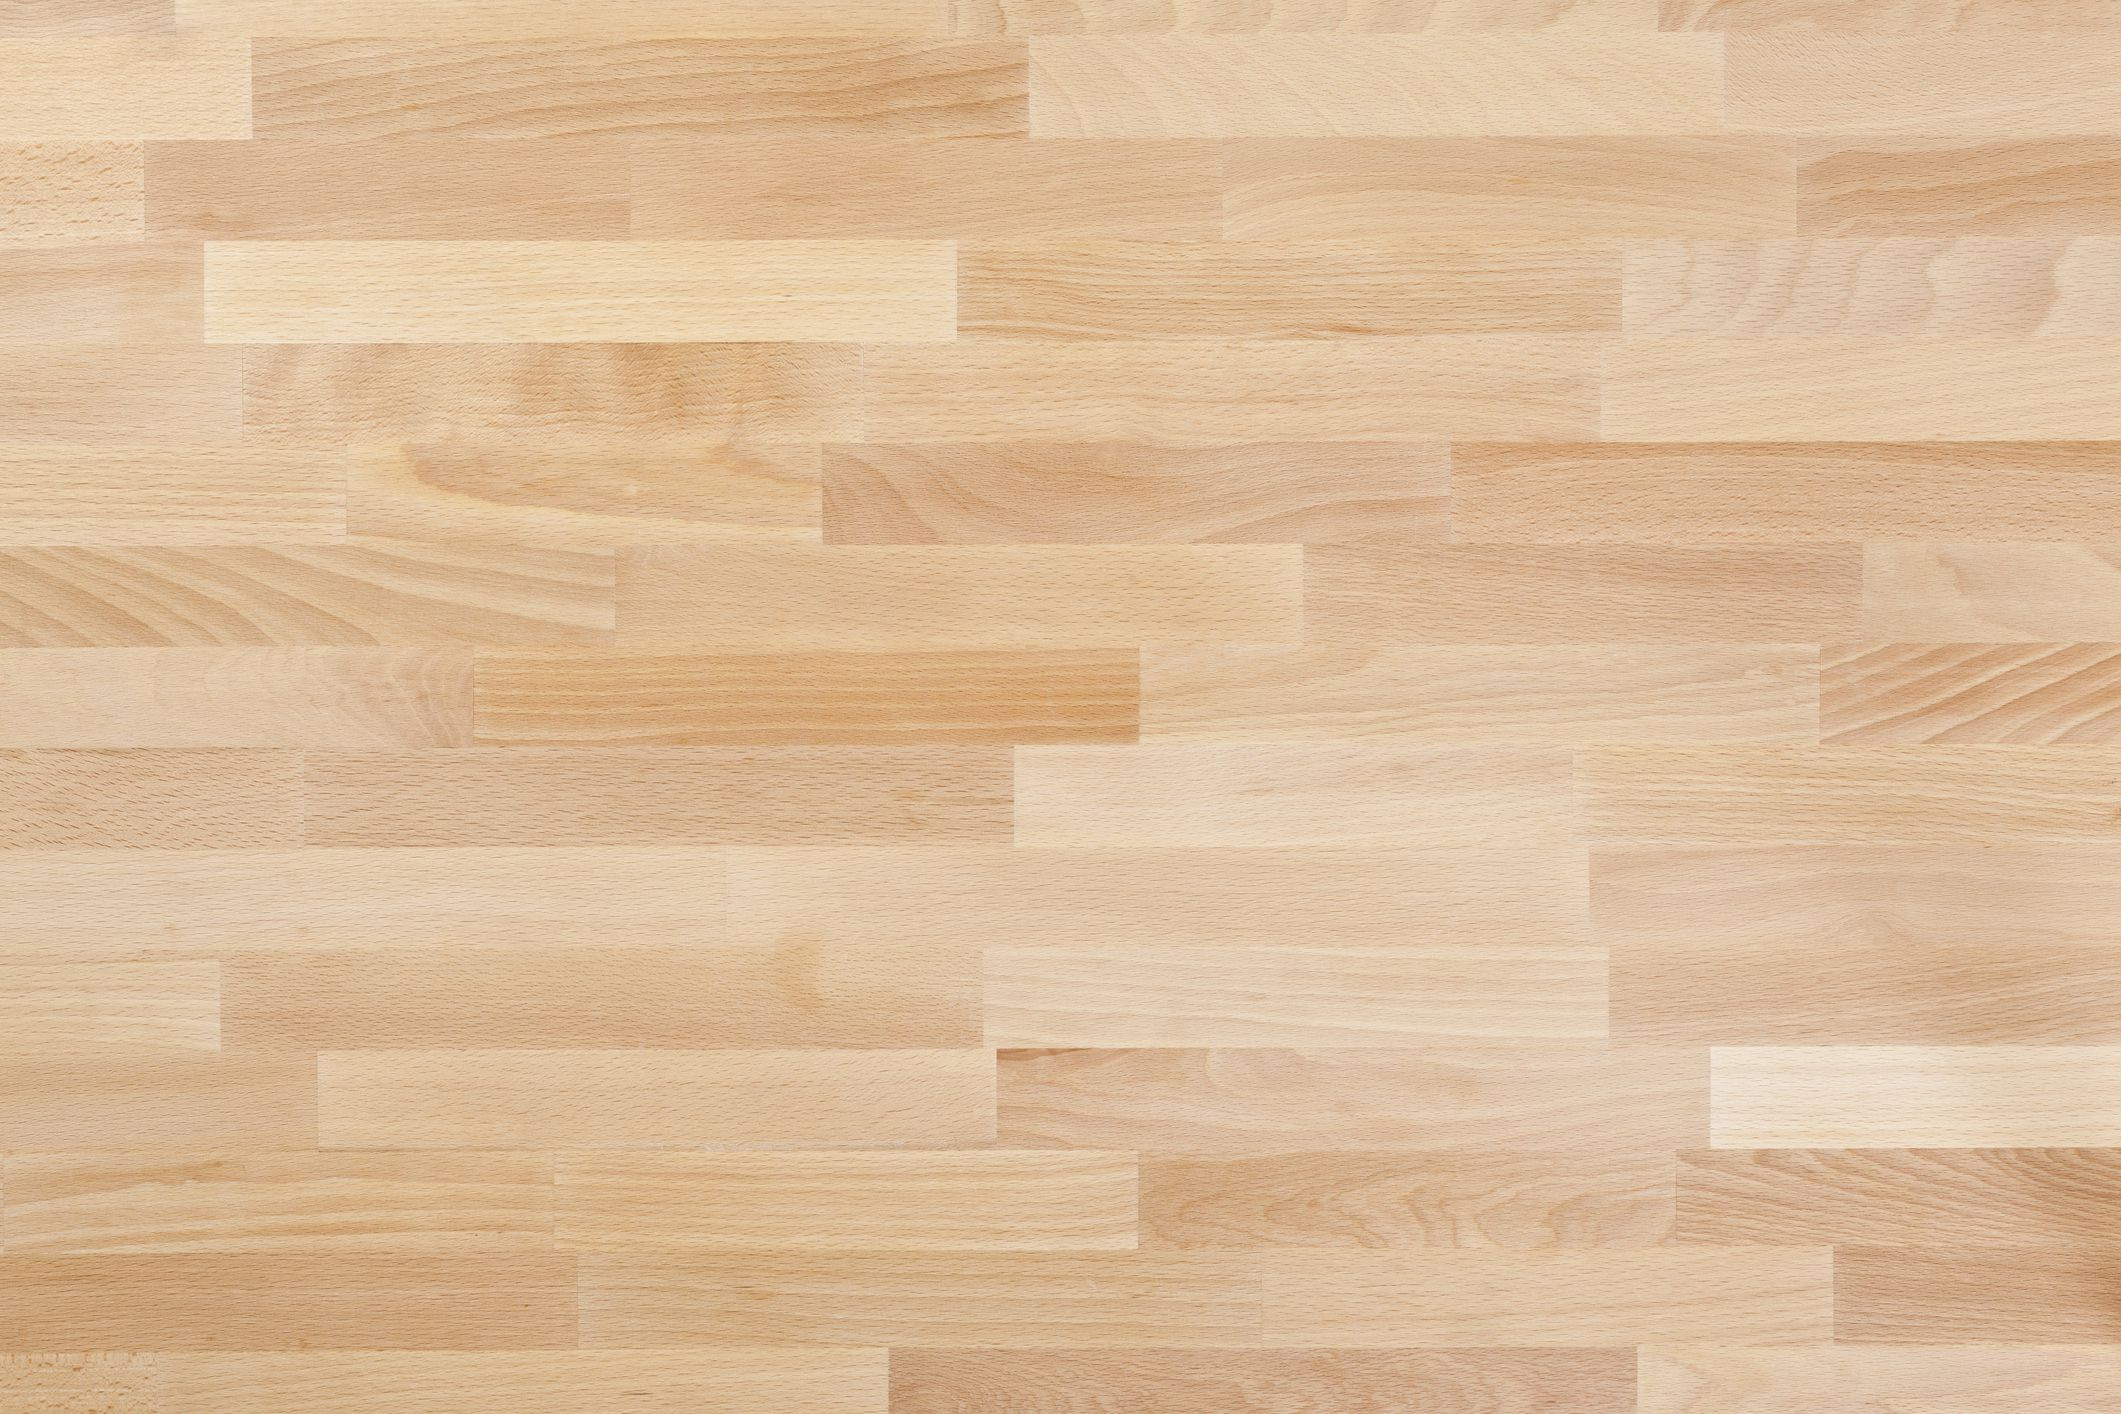 15 Perfect Hardwood Flooring Estimate Online 2024 free download hardwood flooring estimate online of does laminate flooring scratch easily with laminate flooring 185230326 58ff92175f9b581d595e760f